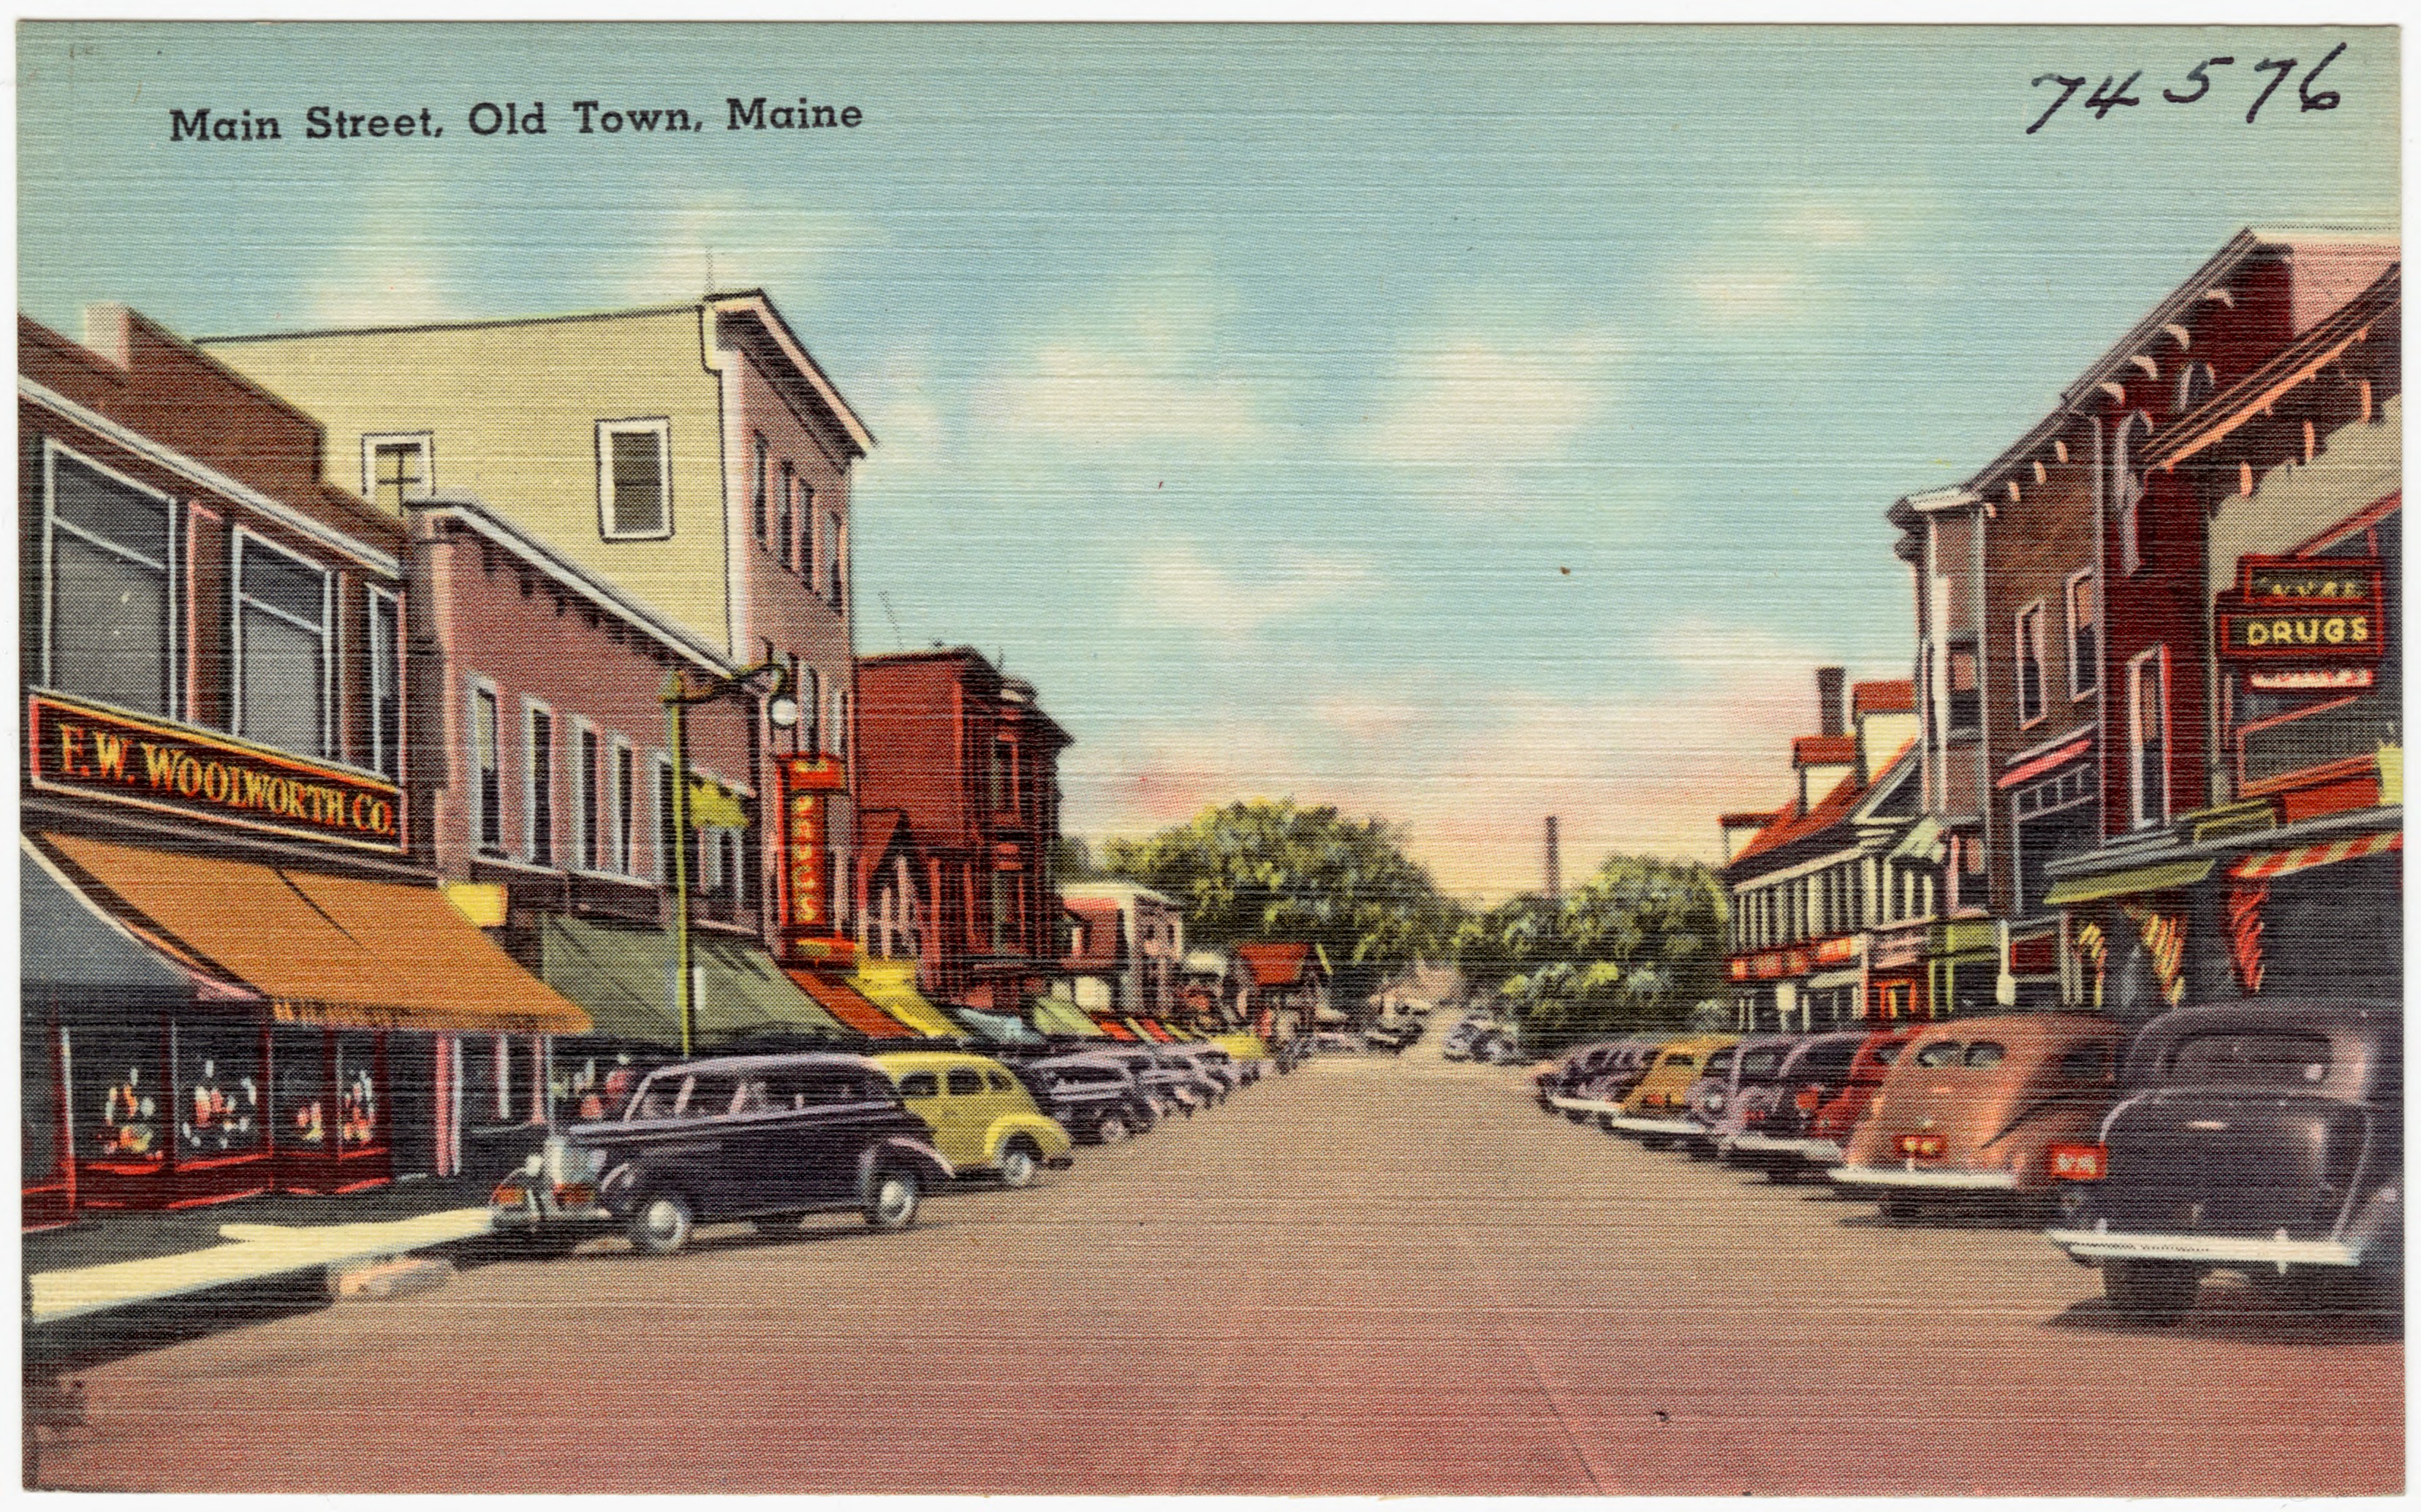 File:Main Street, Old Town, Maine (74576).jpg - Wikimedia Commons